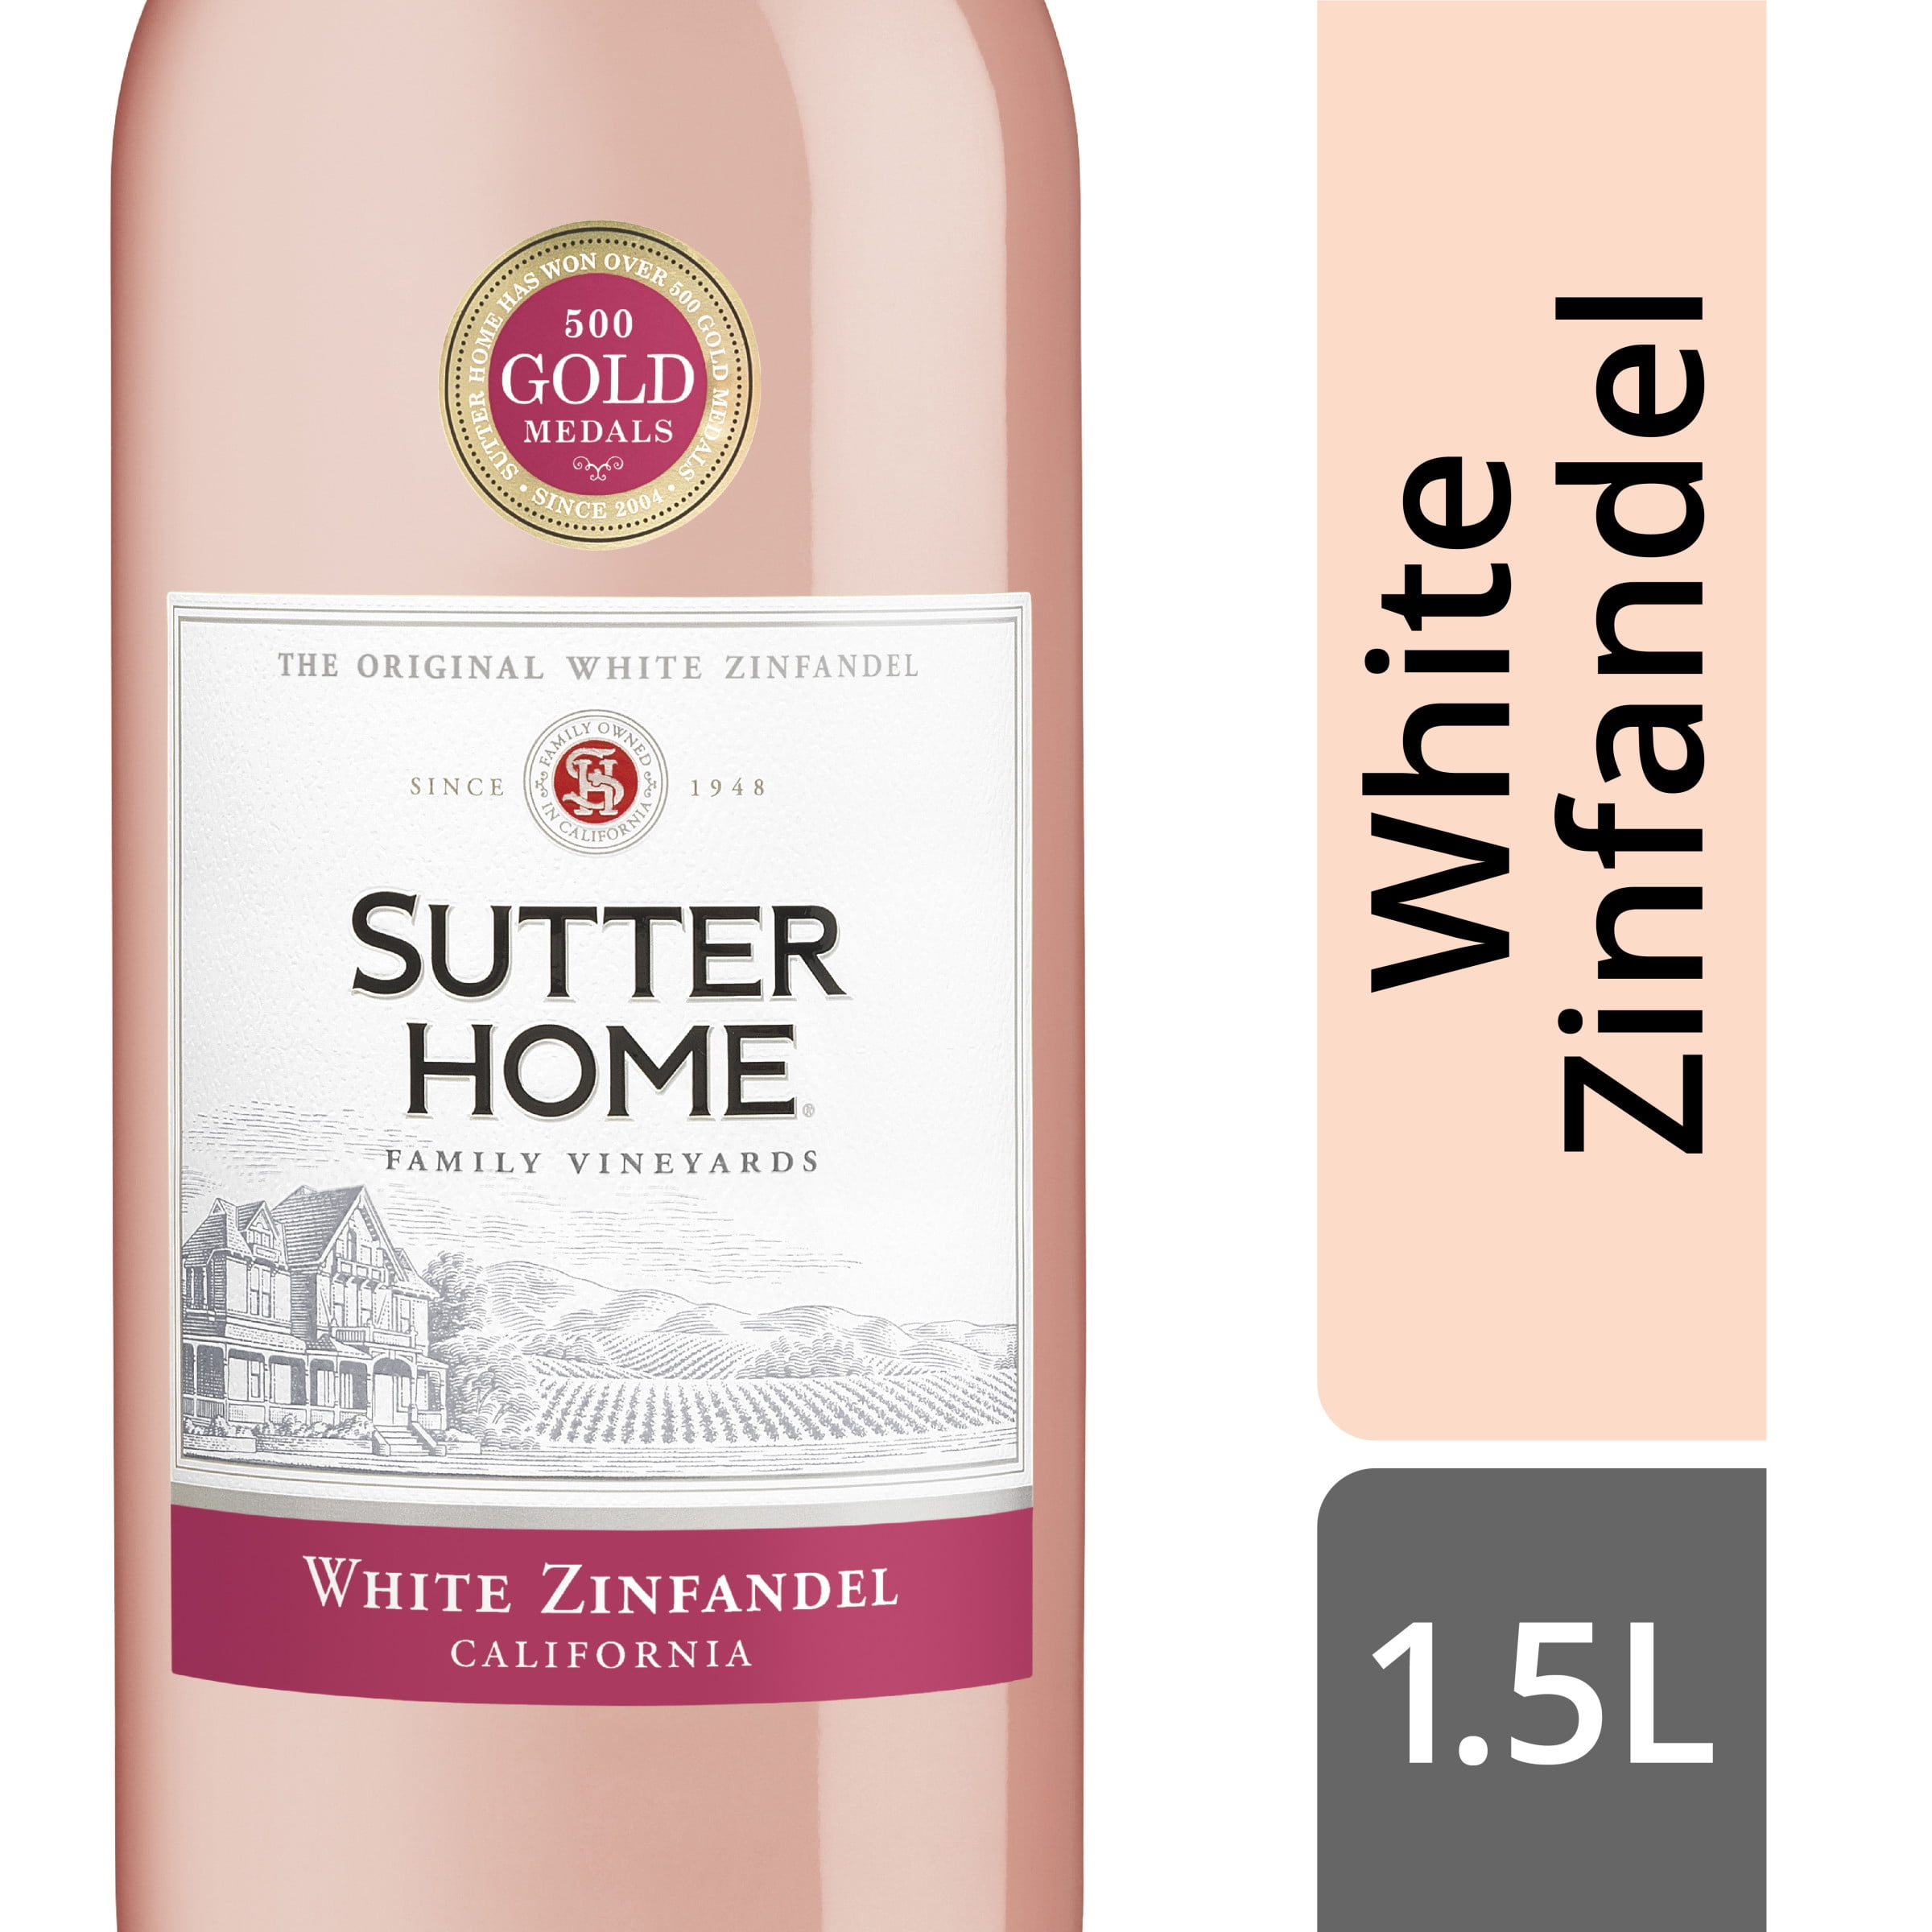 Soldat krybdyr kone Sutter Home White Zinfandel Rose Wine, 1.5L Wine Bottle - Walmart.com